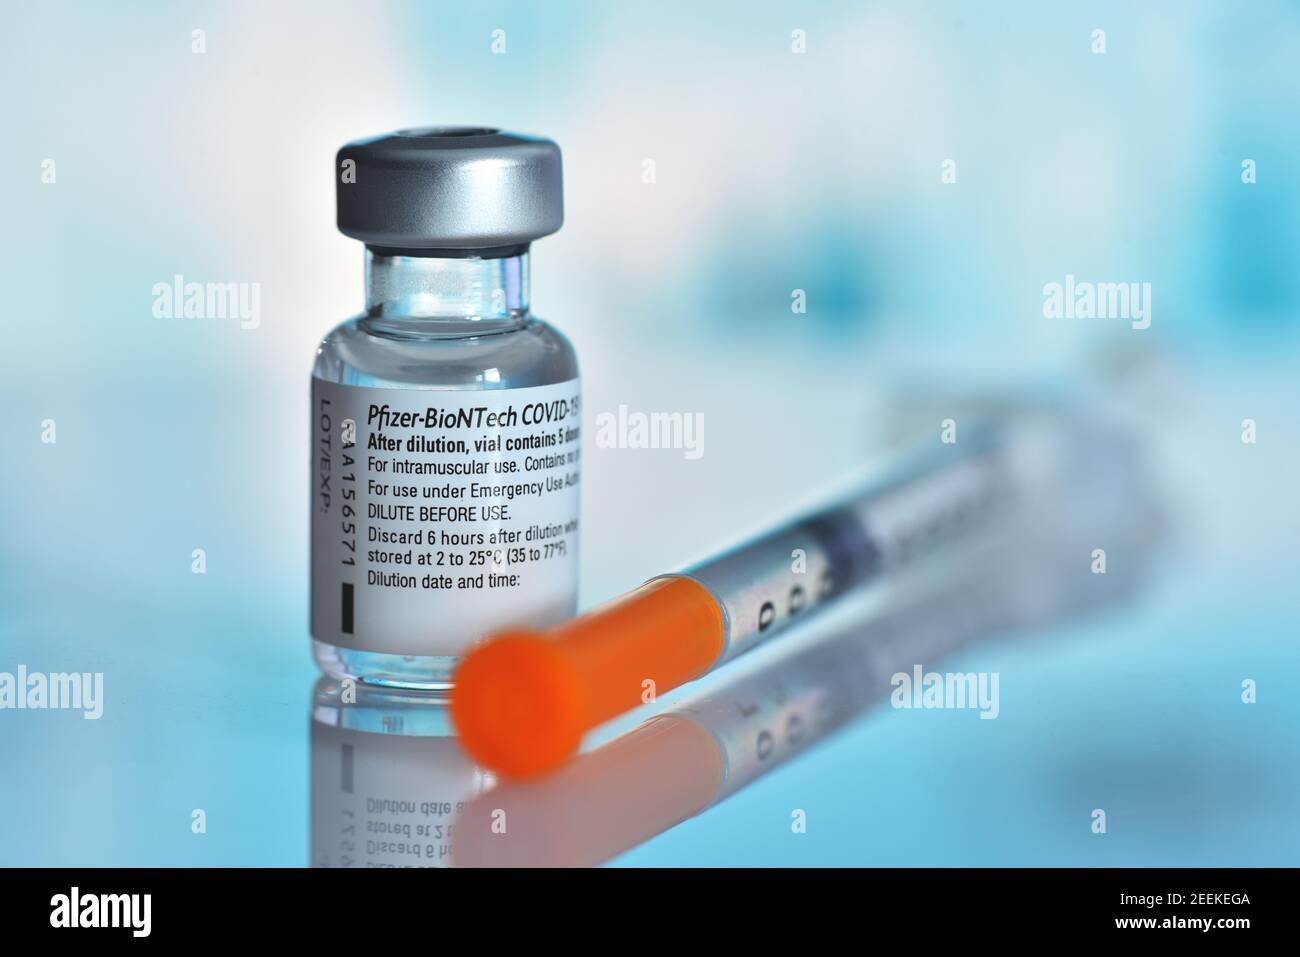 Galati, Rumania - 16 de febrero de 2021: Pfizer-BioNTech COVID-19 vacuna 'comirnaty' ampolla Foto de stock